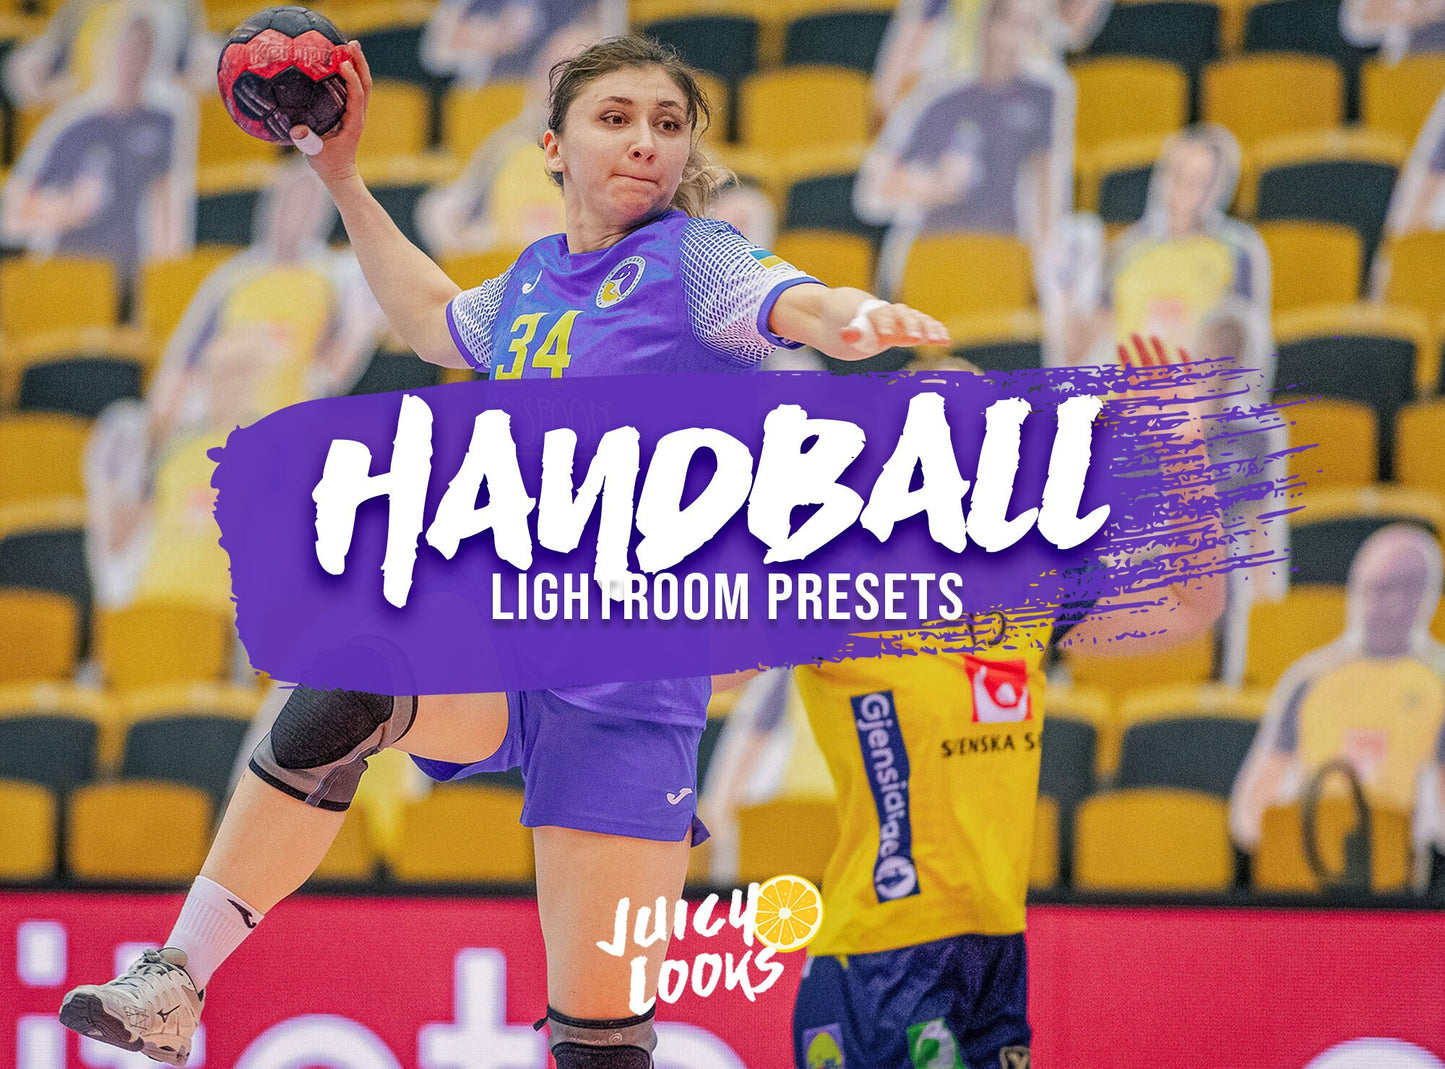 Handball Lightroom Presets for Mobile & Desktop - Juicy Looks Presets